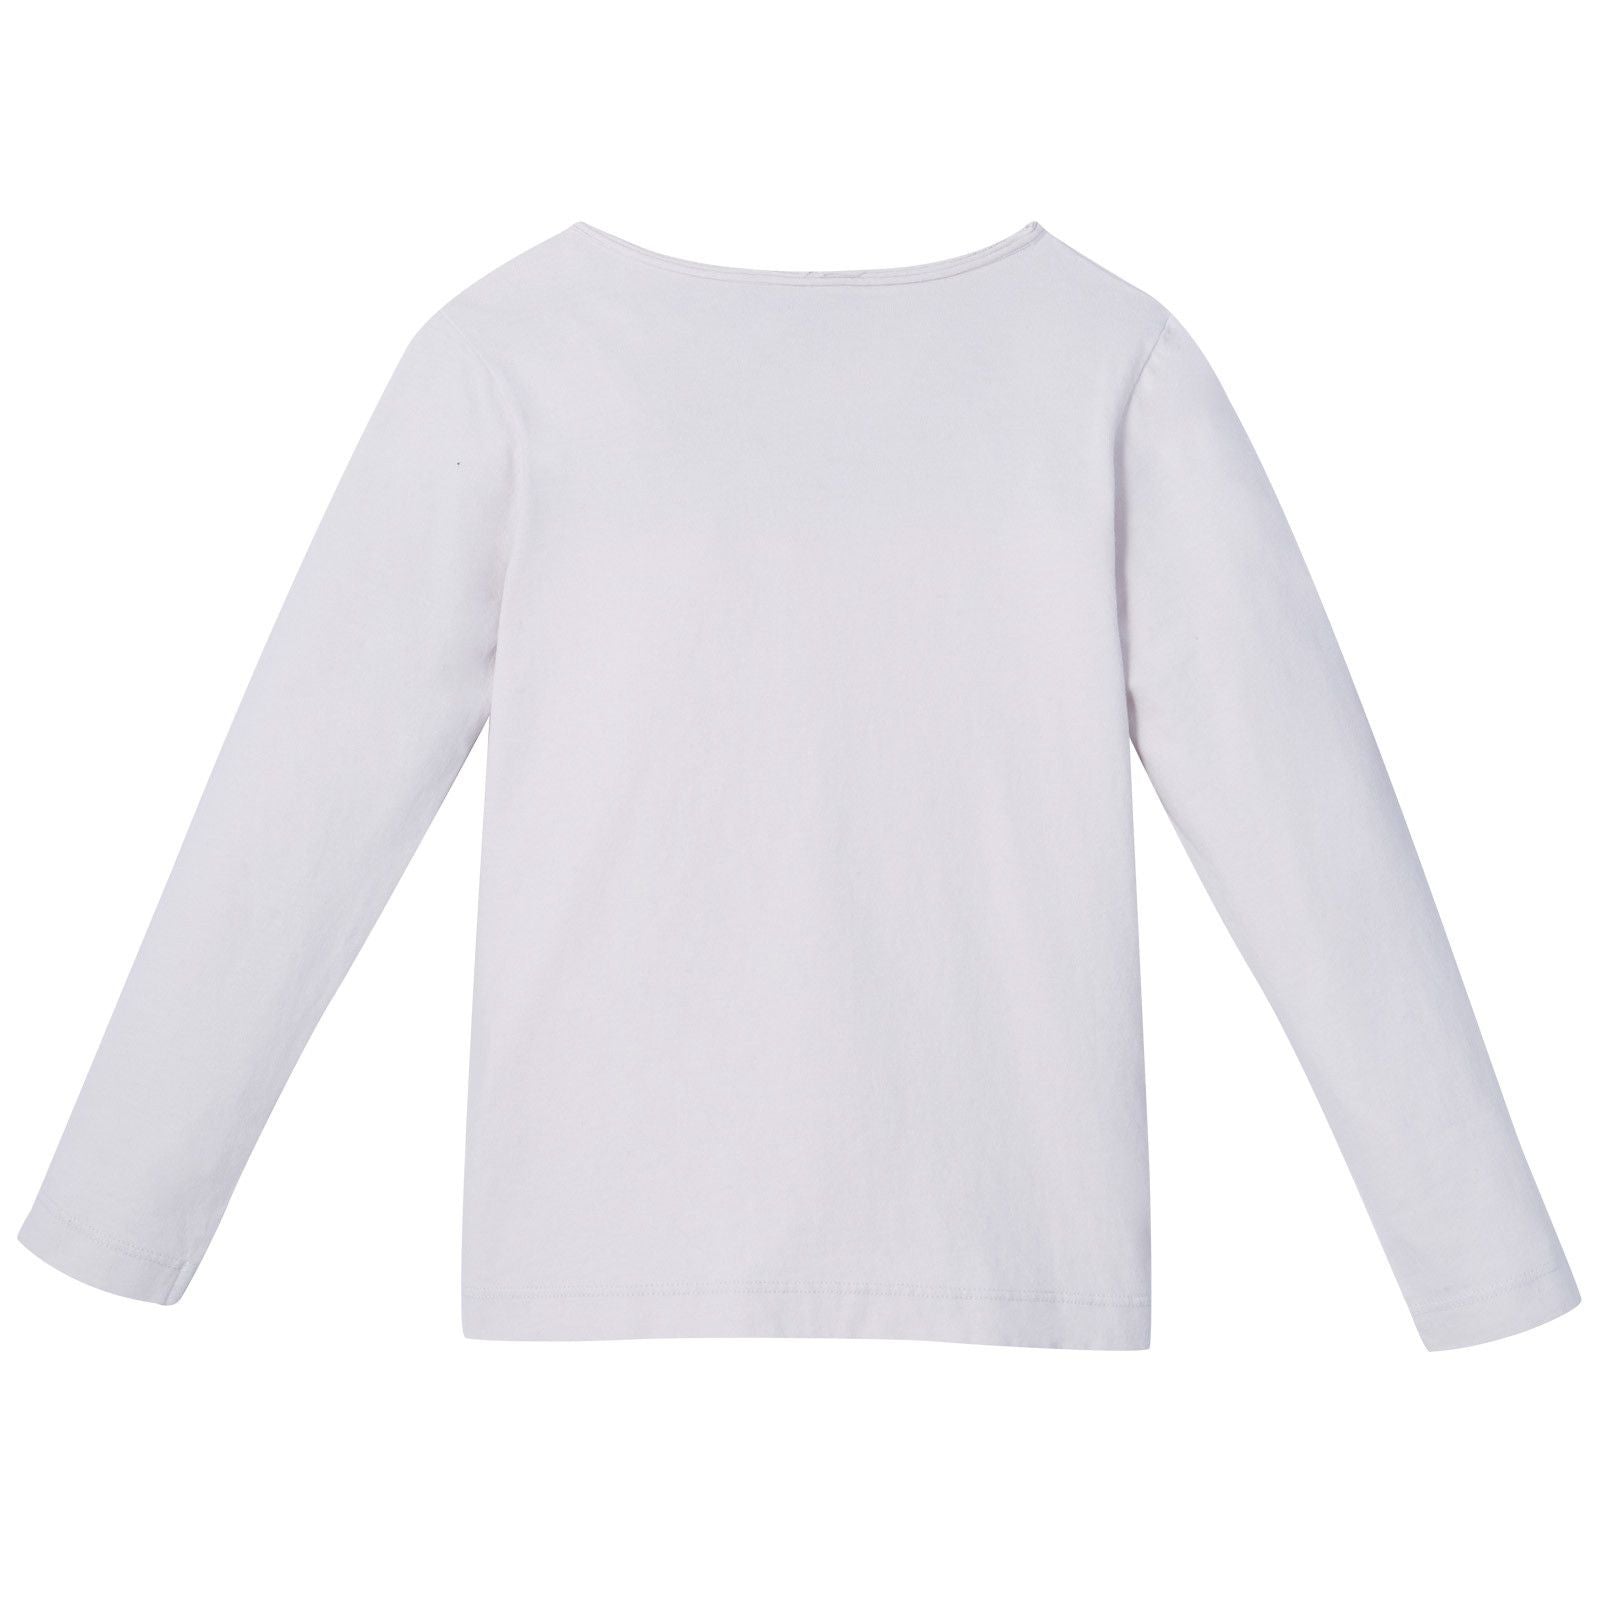 Boys Light Grey Fantasy Printed Cotton T-Shirt - CÉMAROSE | Children's Fashion Store - 2